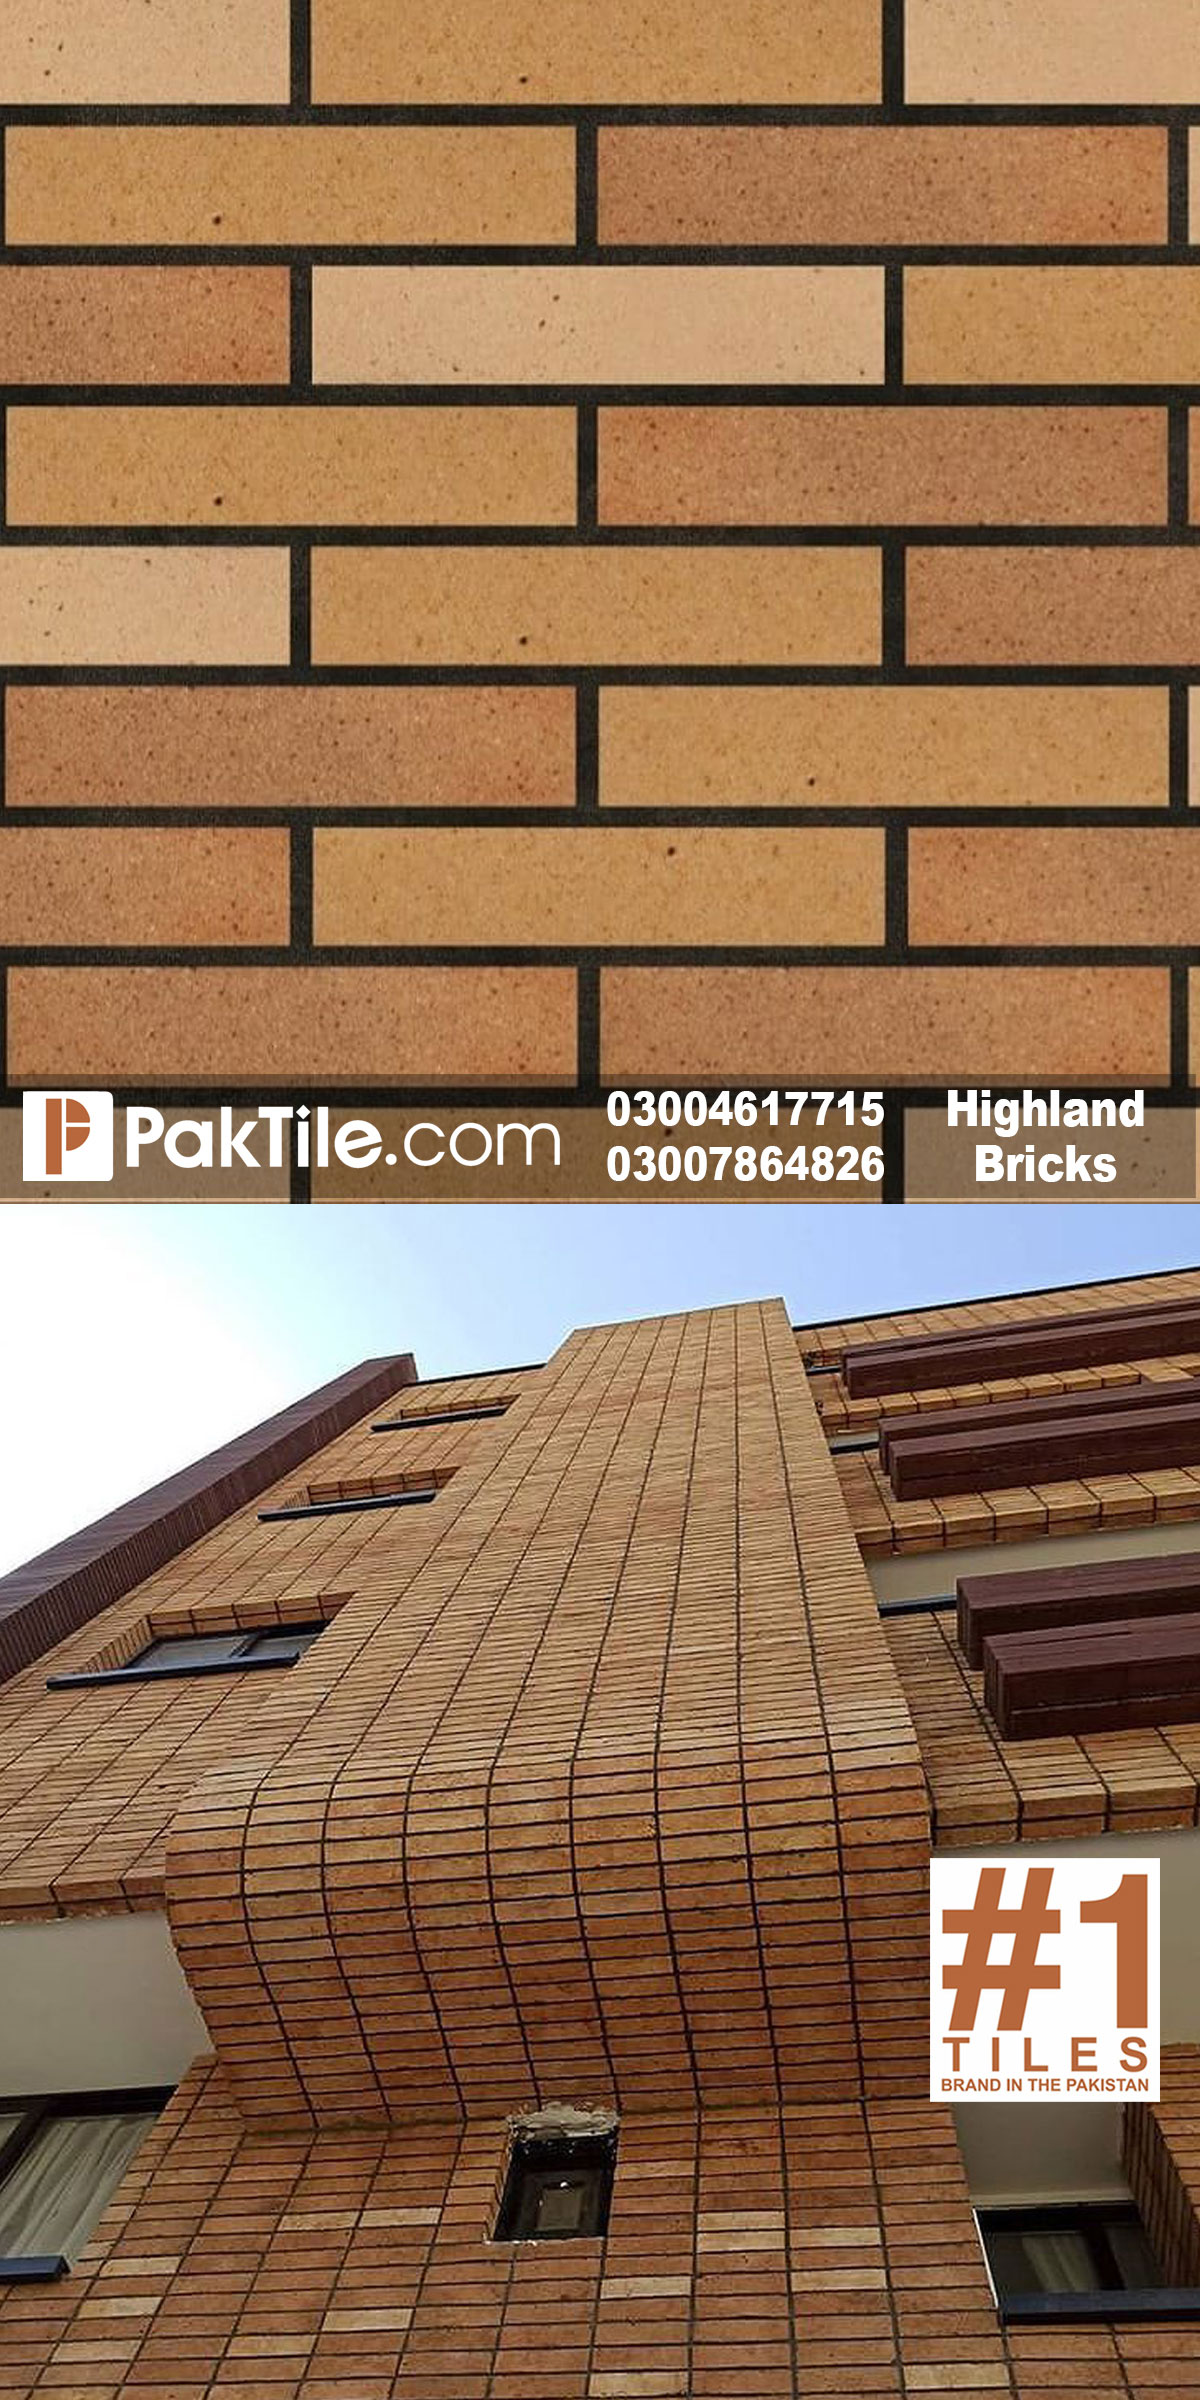 Brick cladding tiles for exterior walls